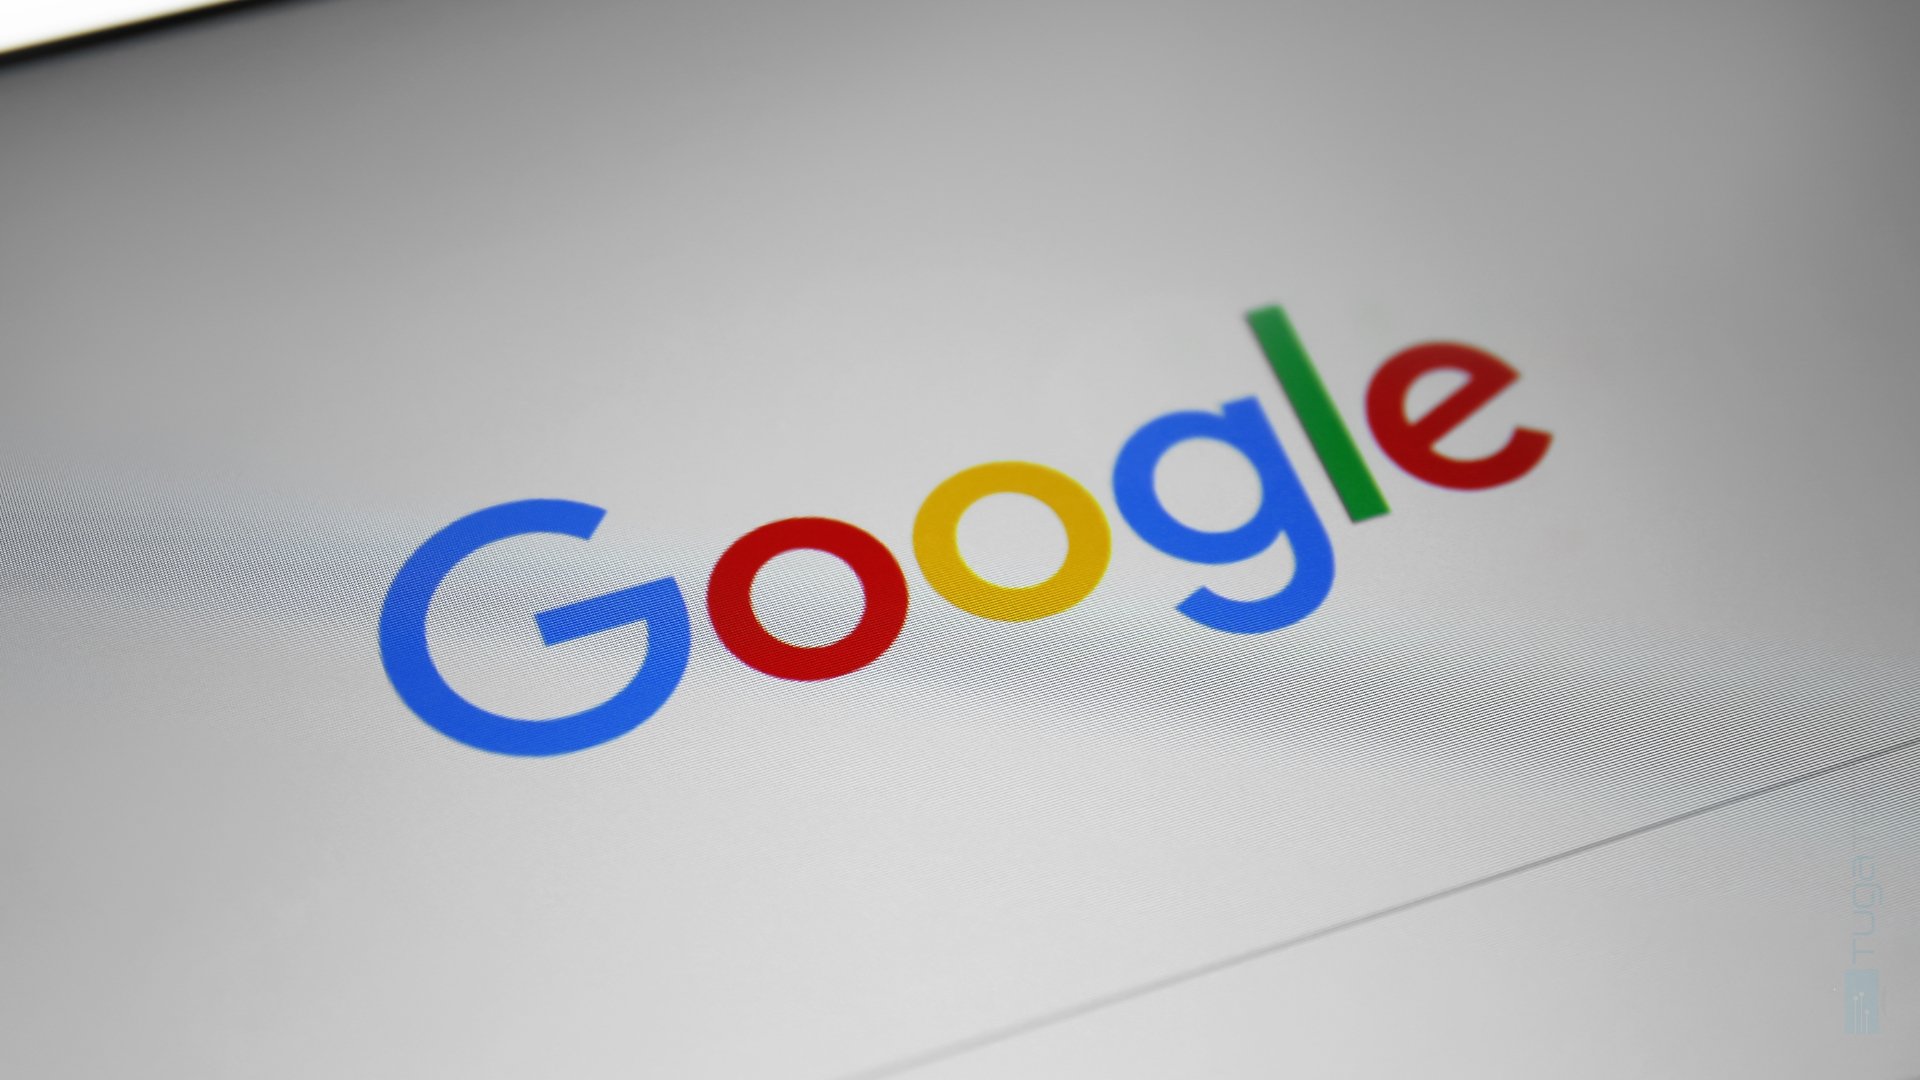 Google remove funcionalidade do seu motor de pesquisa